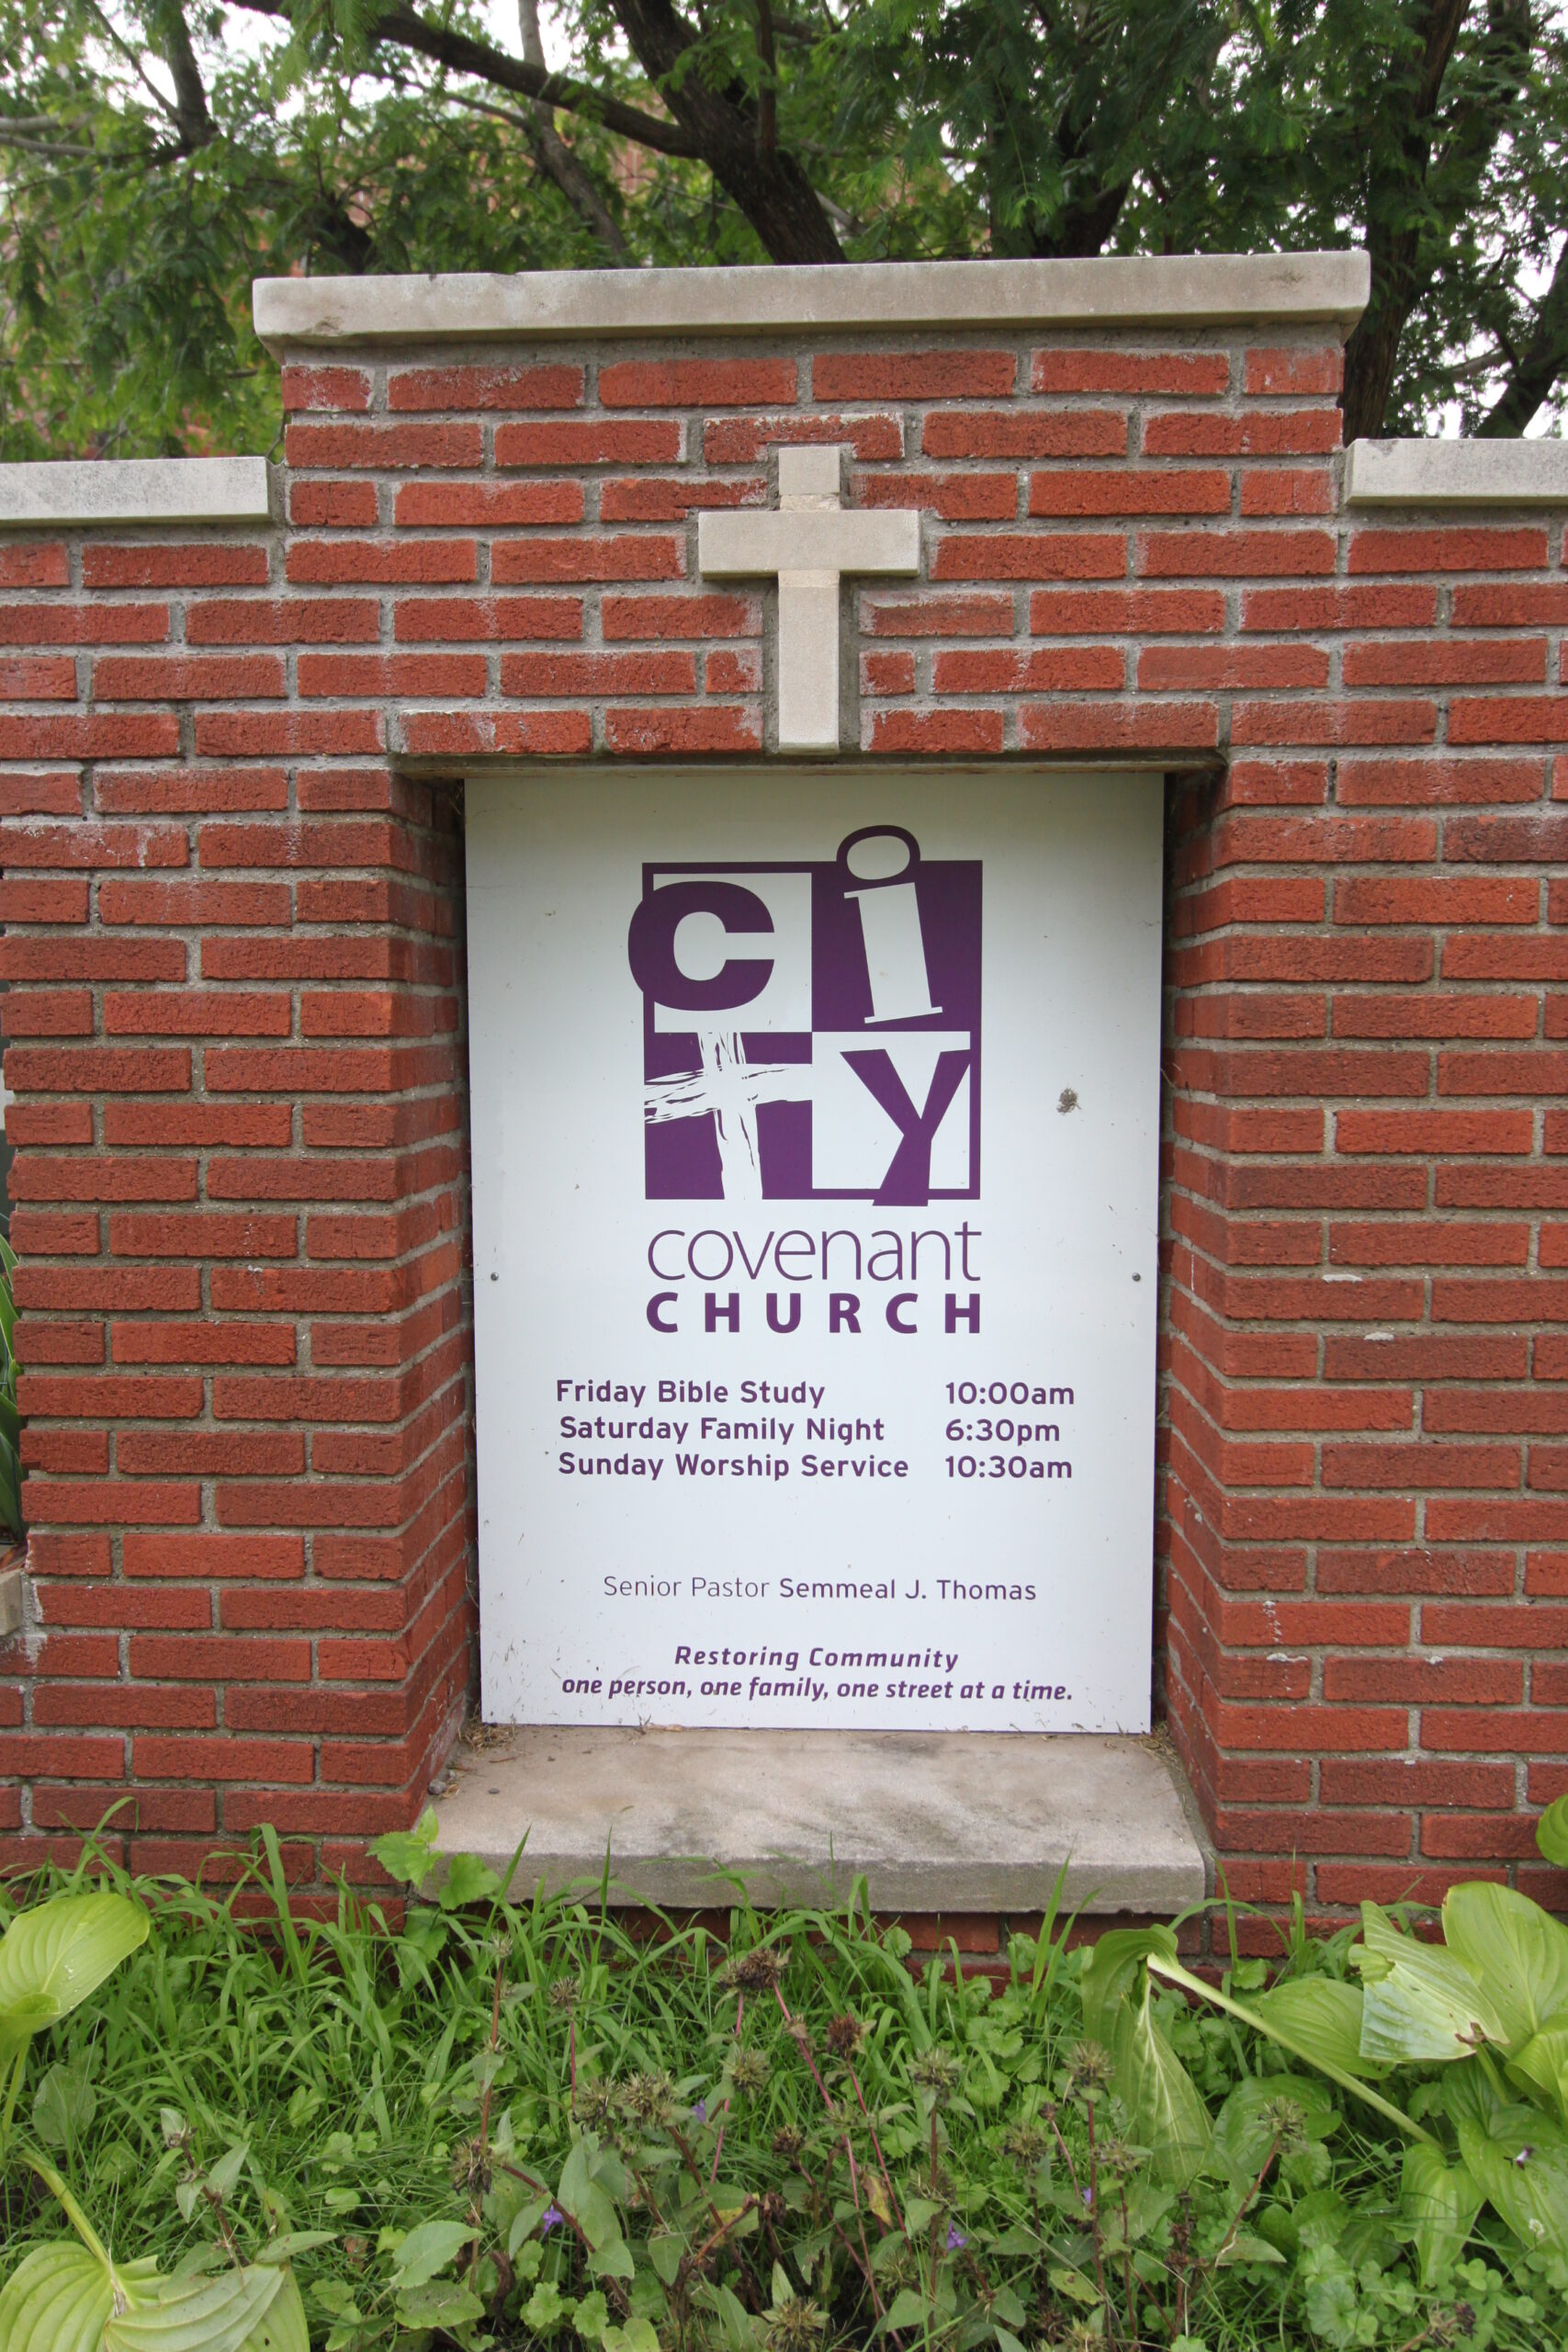 City Covenant Church